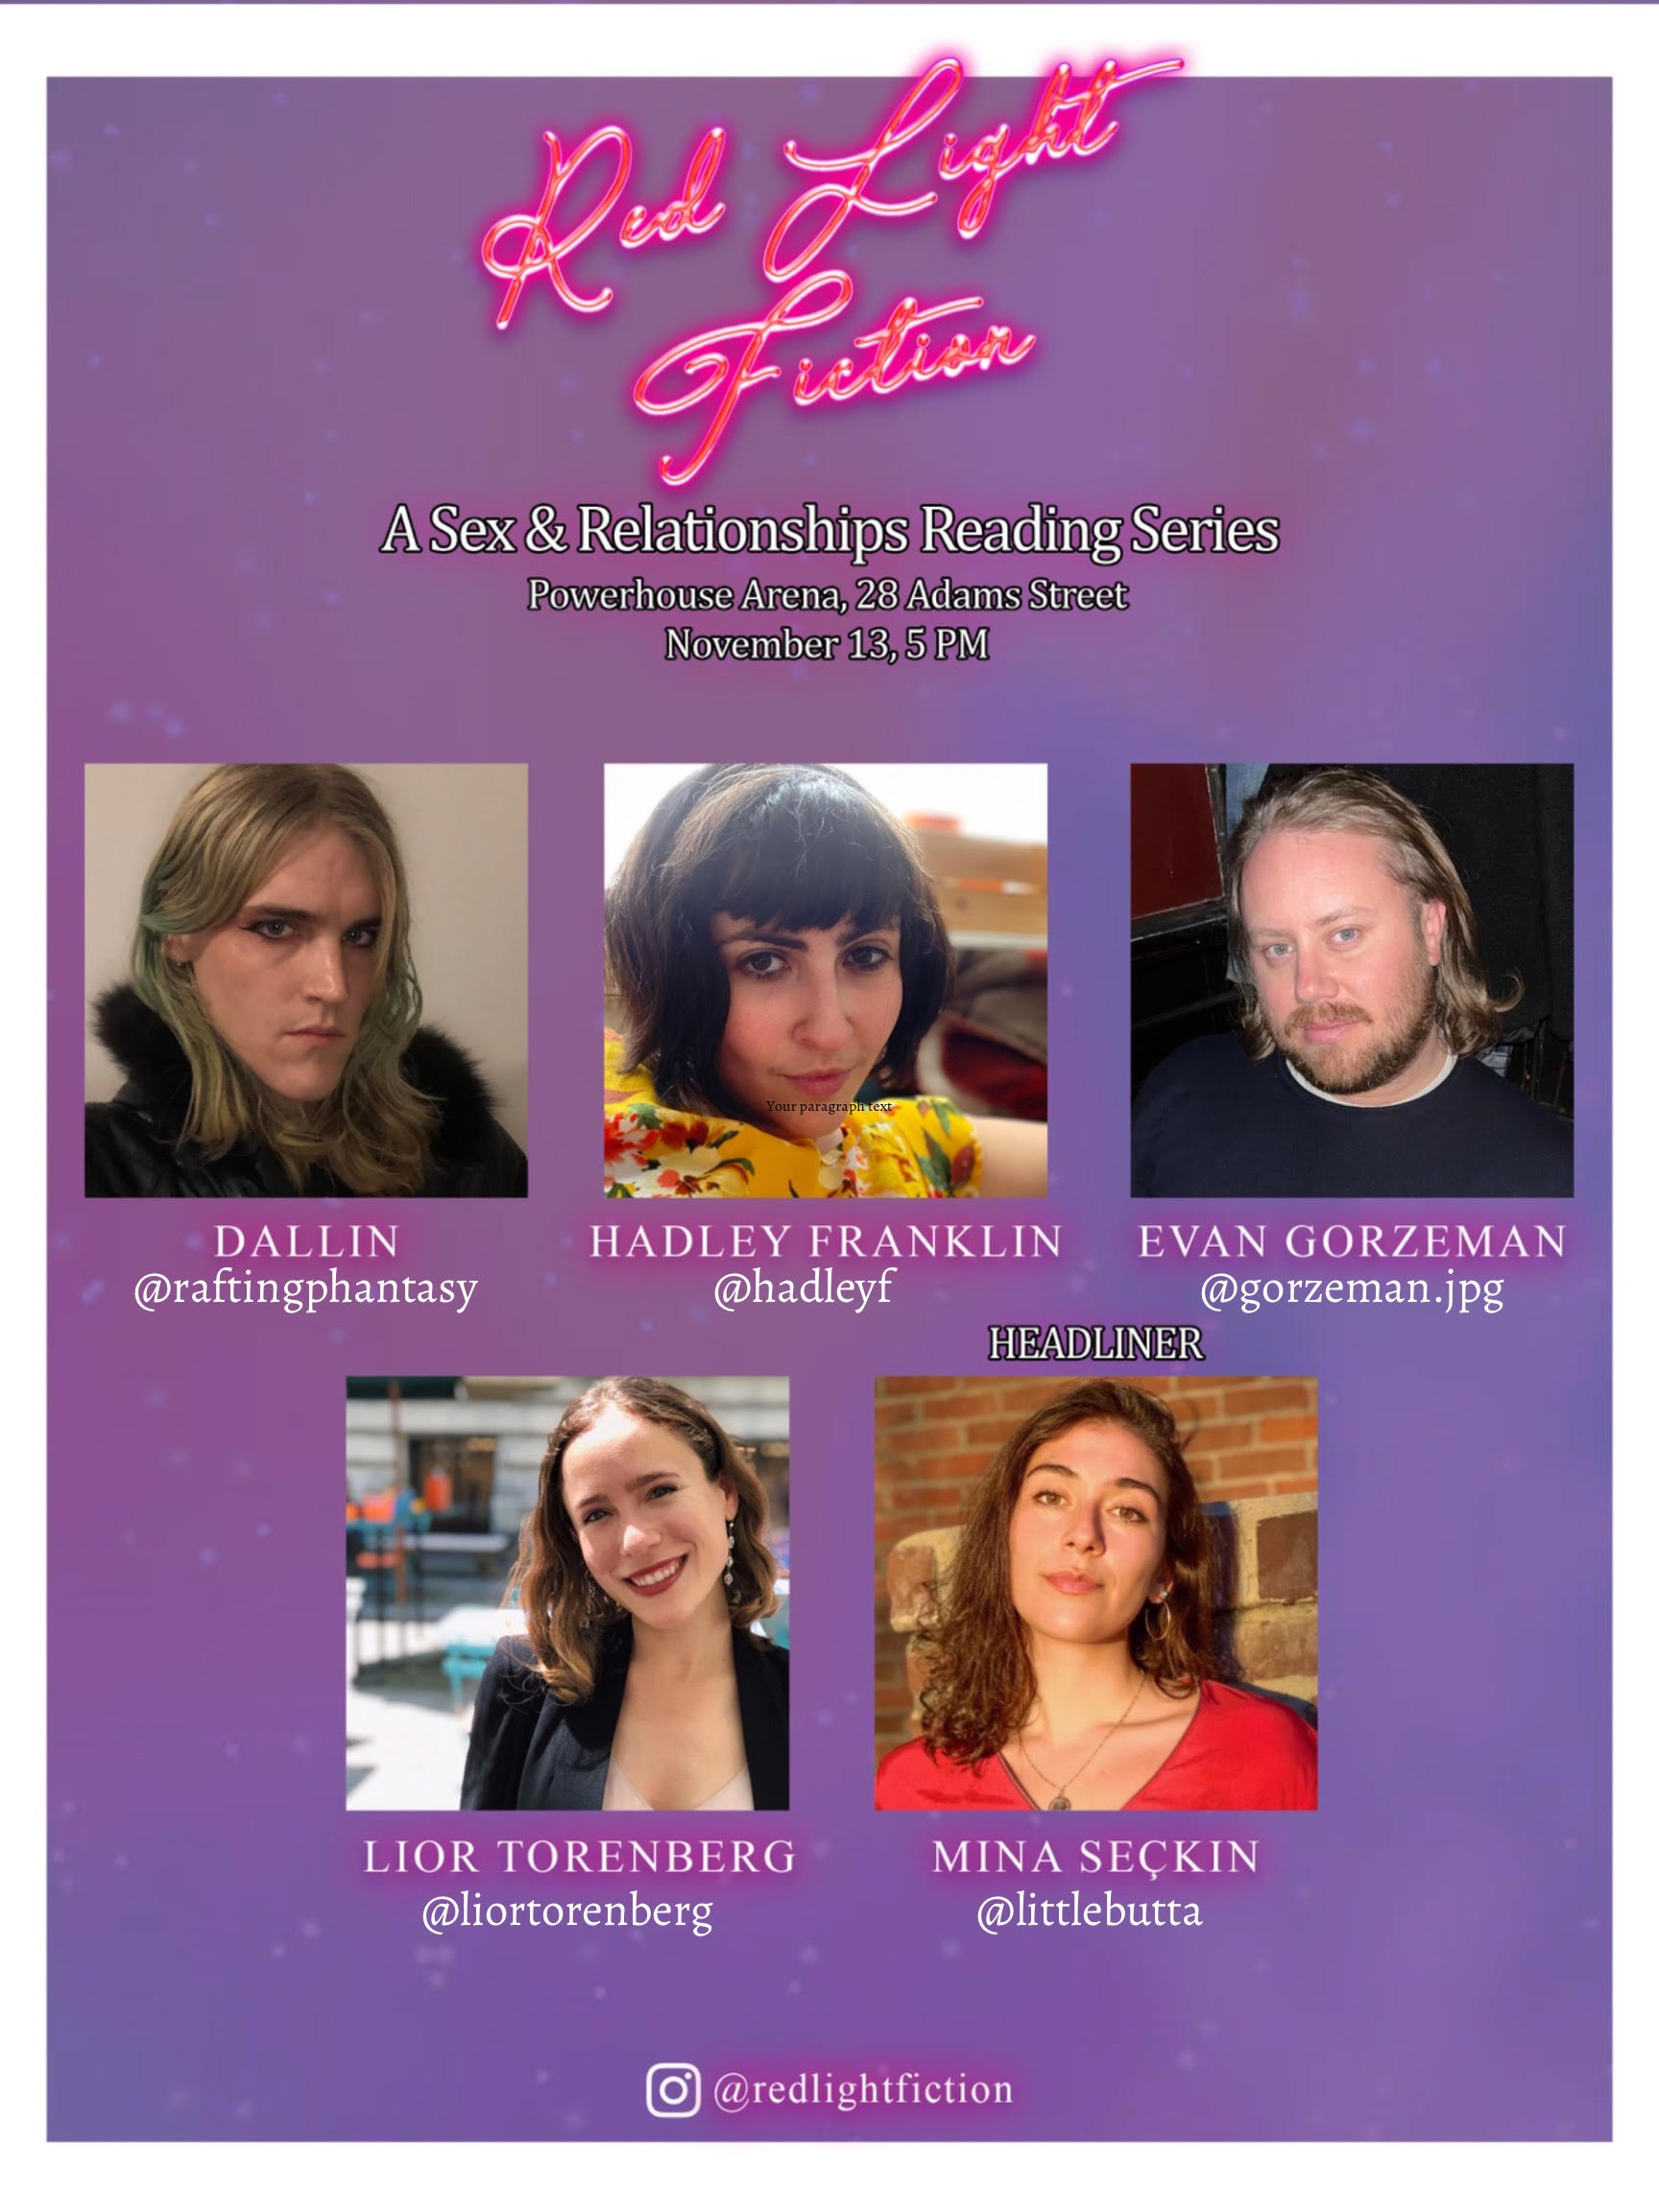 Red Light Fiction featuring Hadley Franklin, Evan Gorzeman, Dallin, Lior Torenberg, and Mina Seckin!